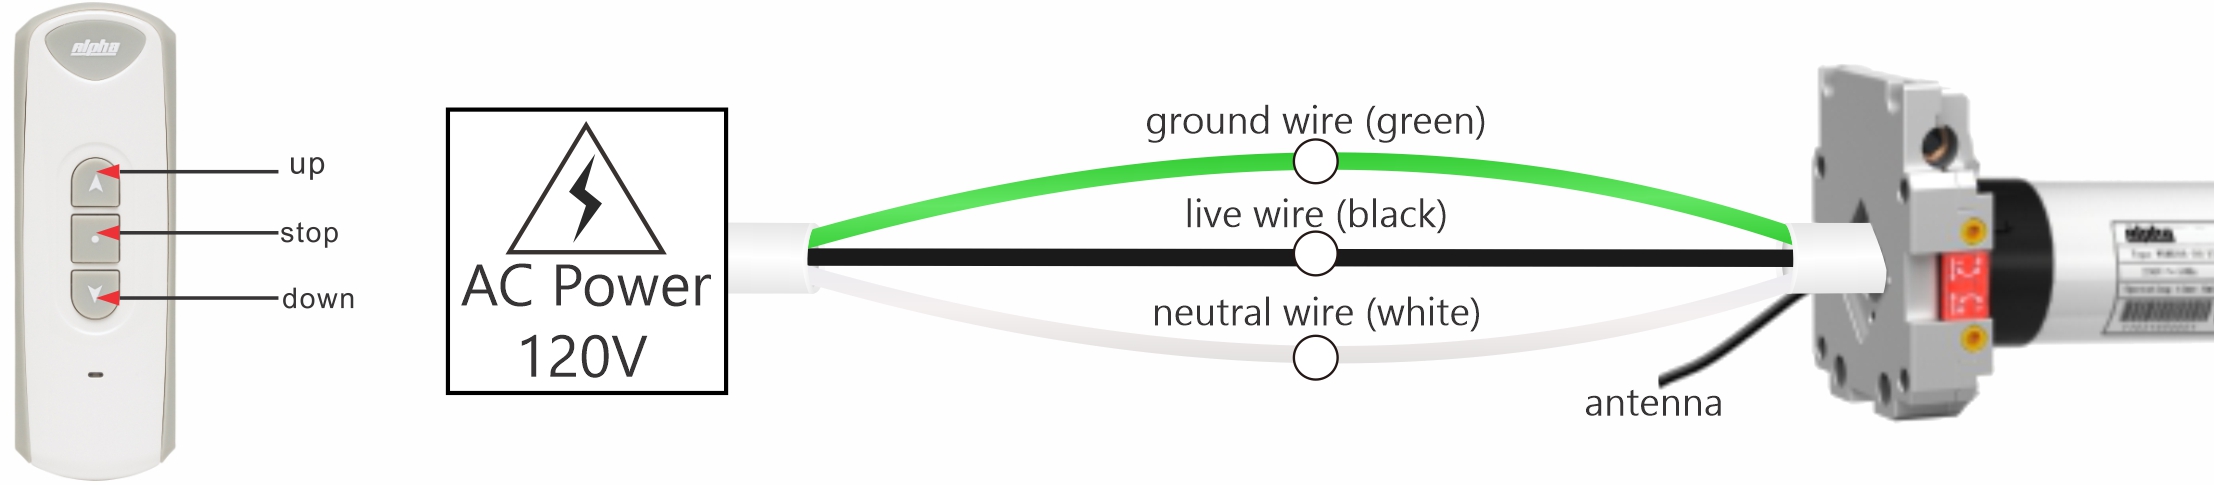 wsme-wires